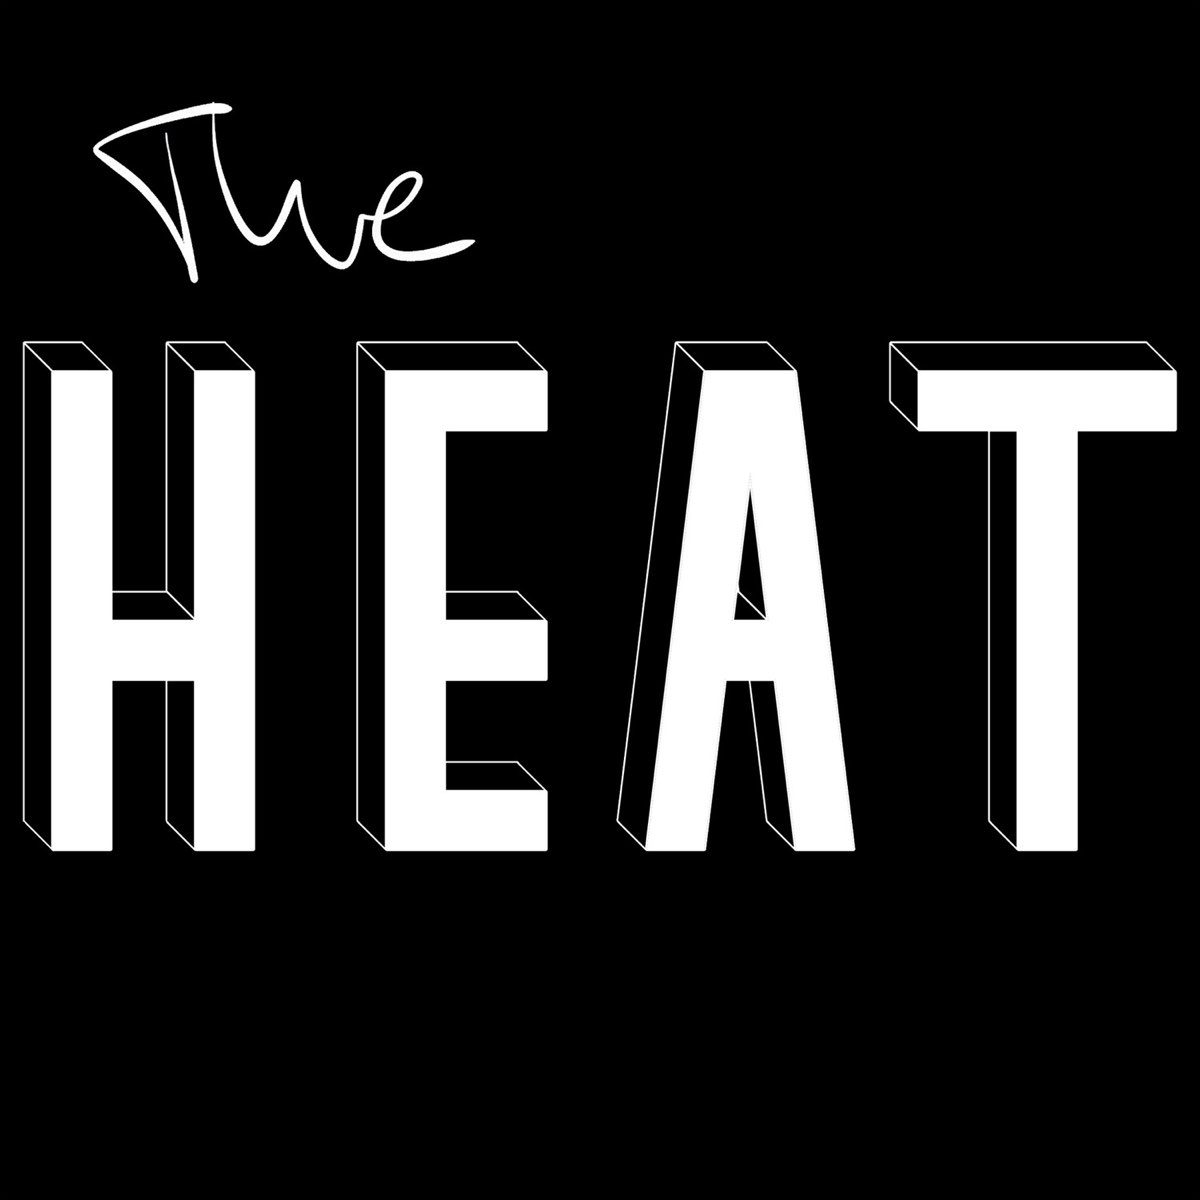 Steam heat песня фото 8